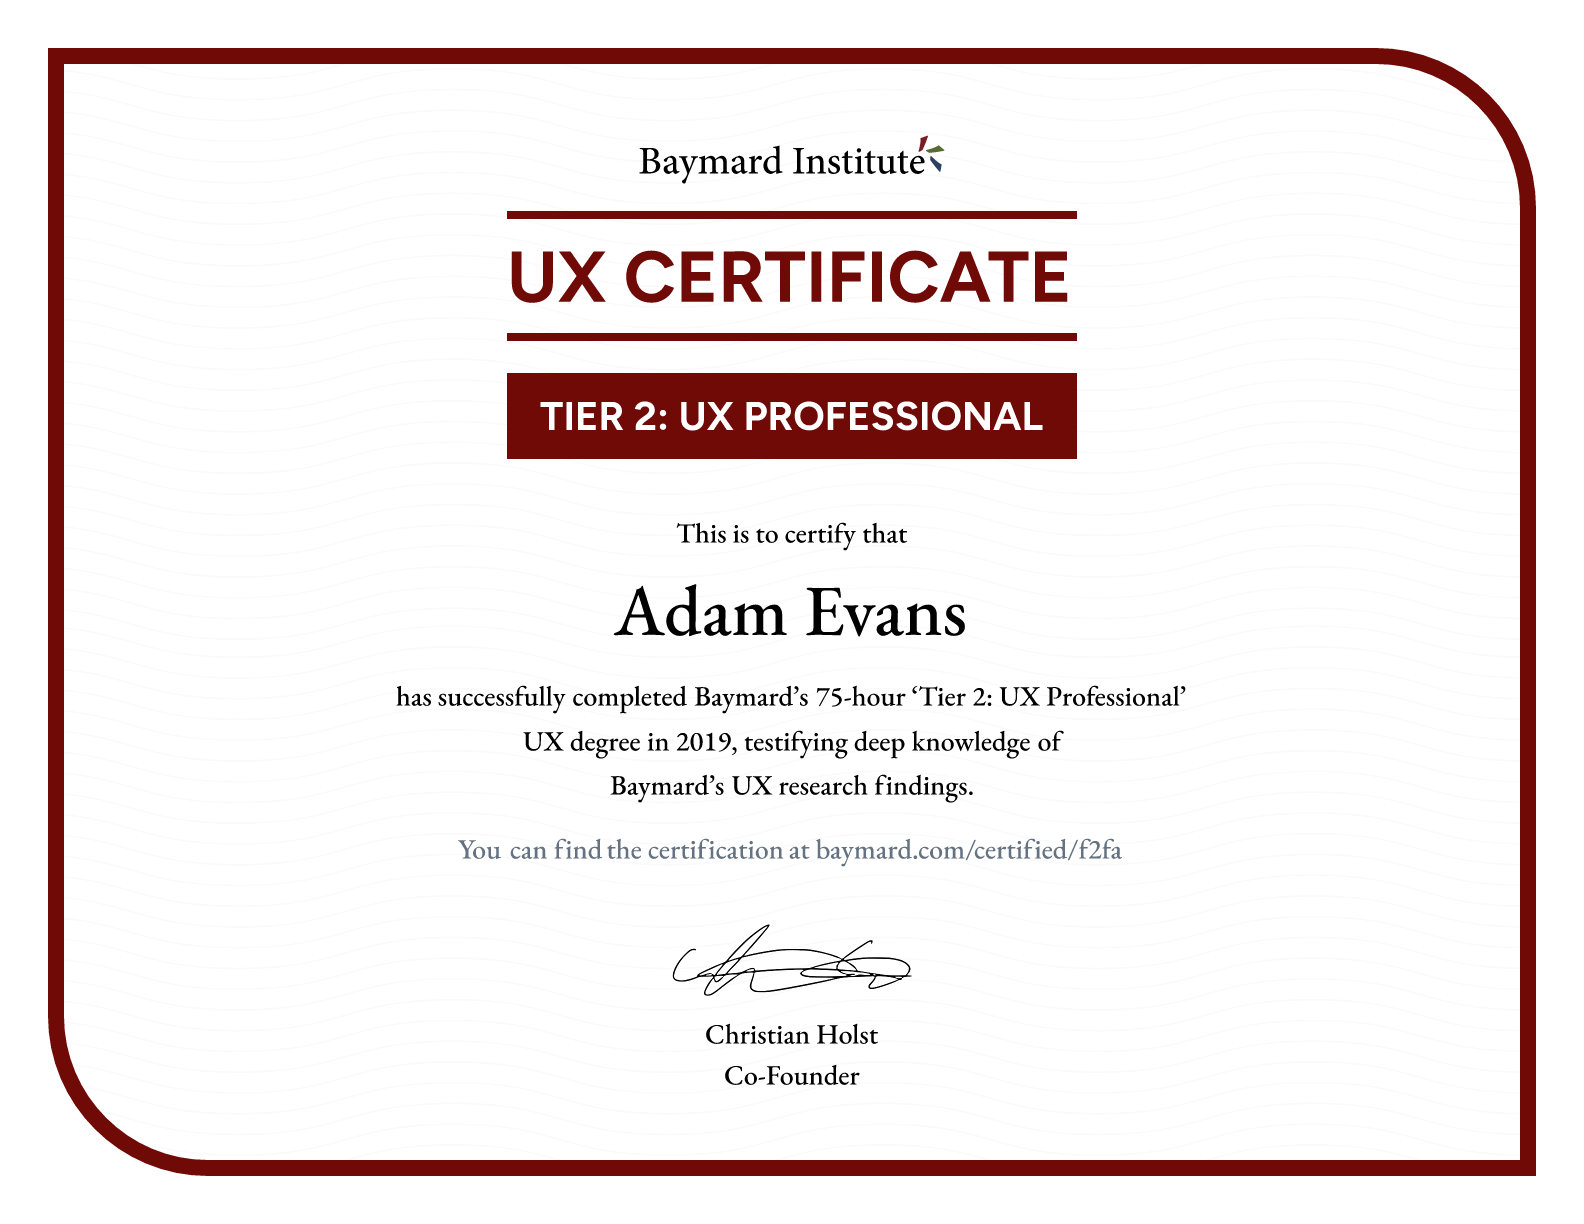 Adam Evans’s certificate